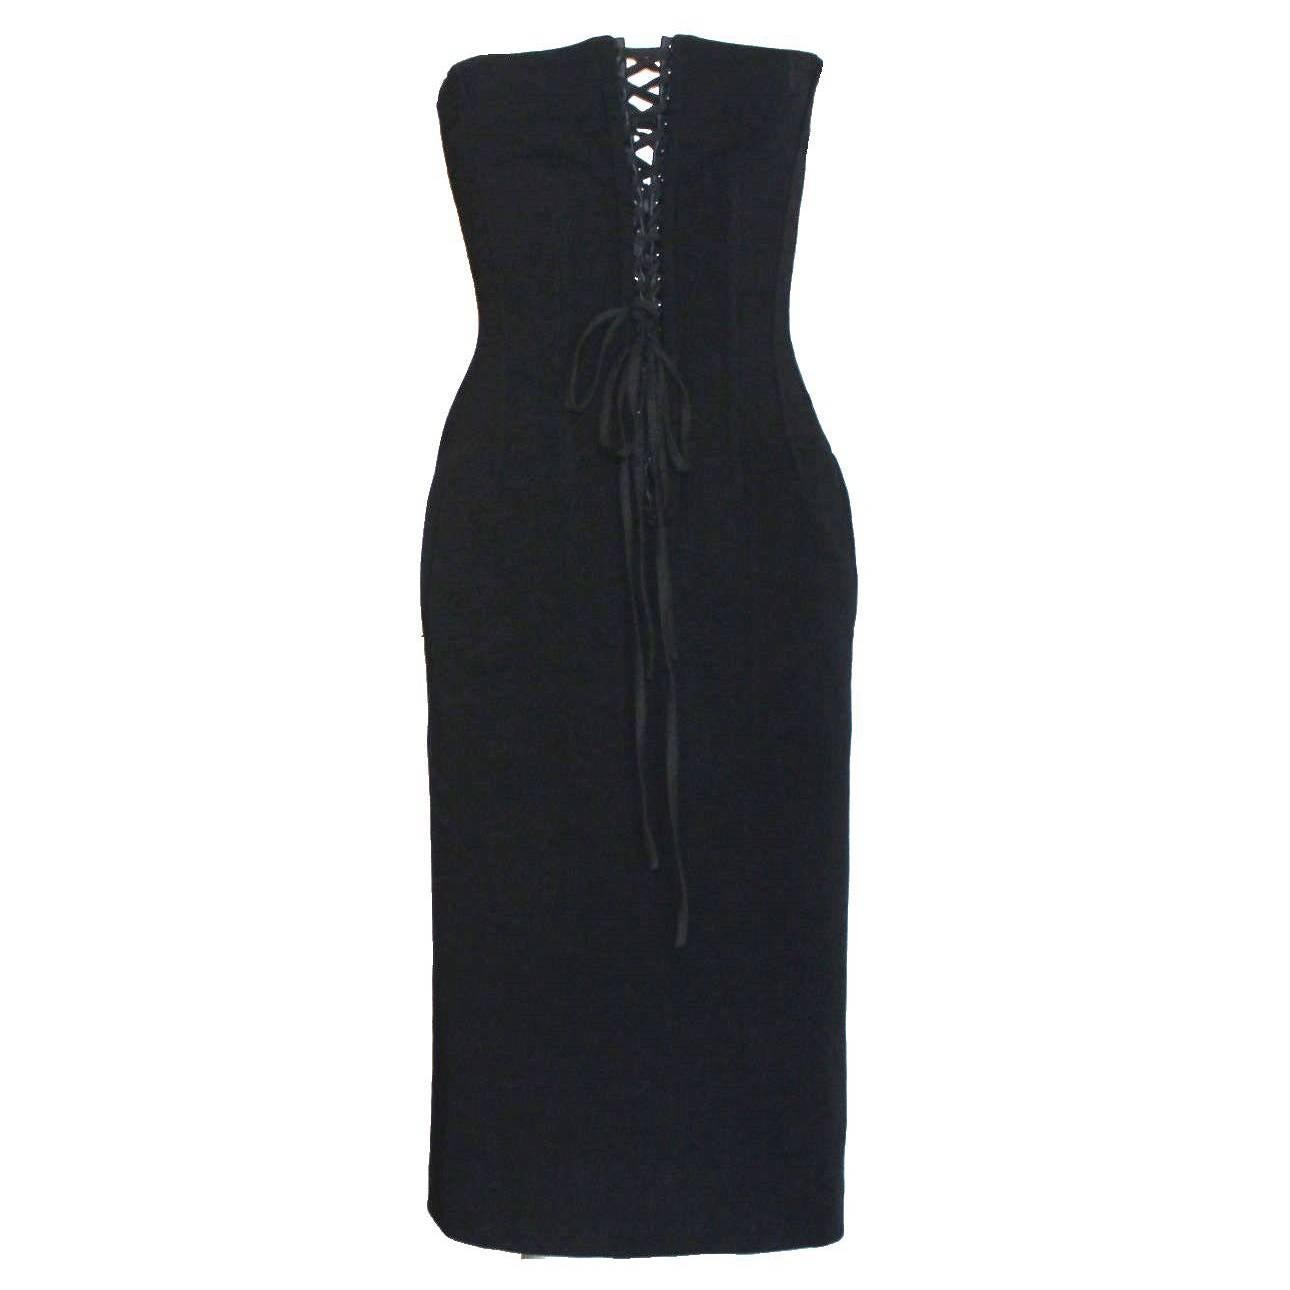 Dolce & Gabbana Hourglass Boned Corset Lace Up Black Dress 